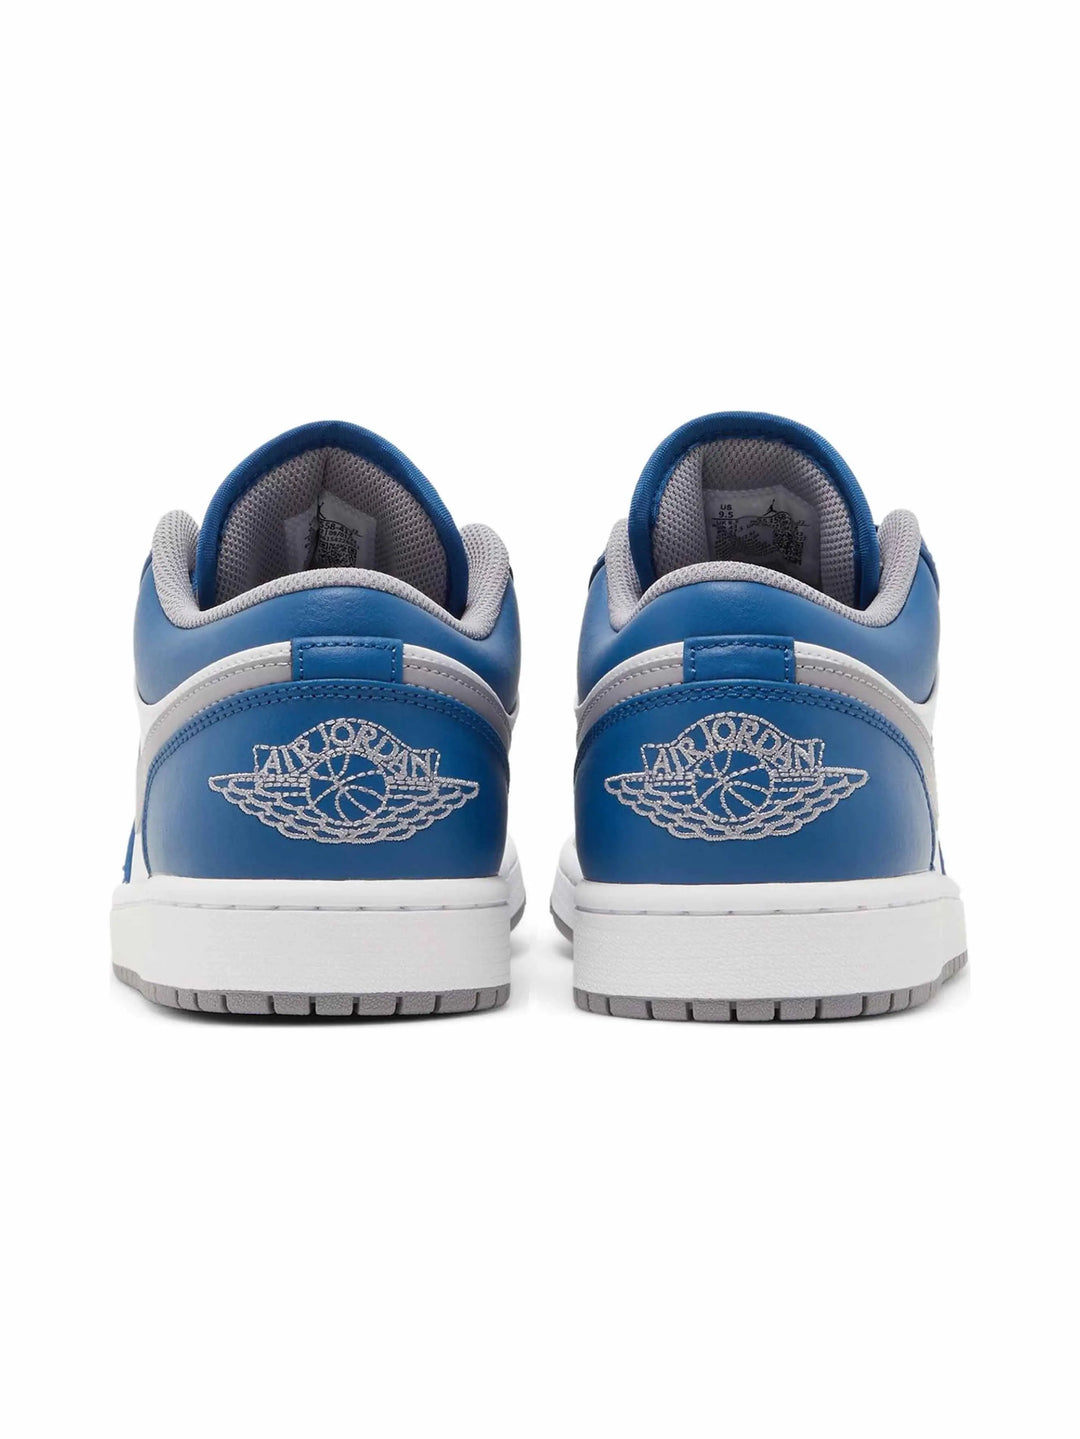 Nike Air Jordan 1 Low True Blue - Prior